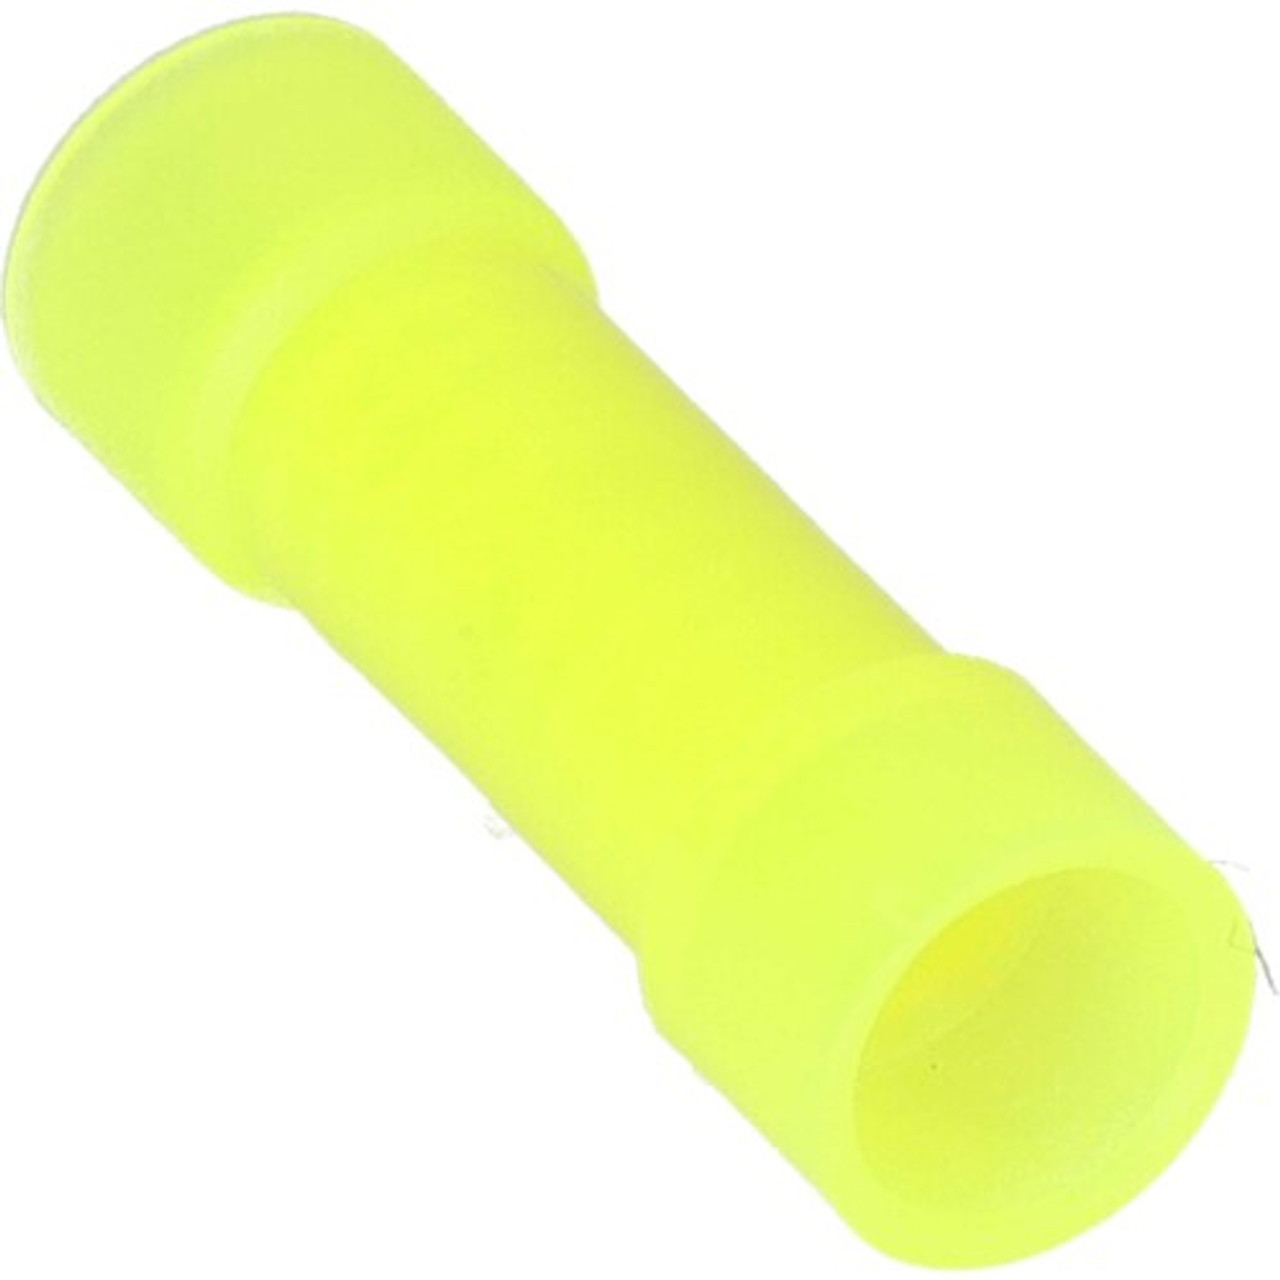 Yellow Nylon Butt Splice Connector 14-10 ga. "See-Thru" (100 pack)